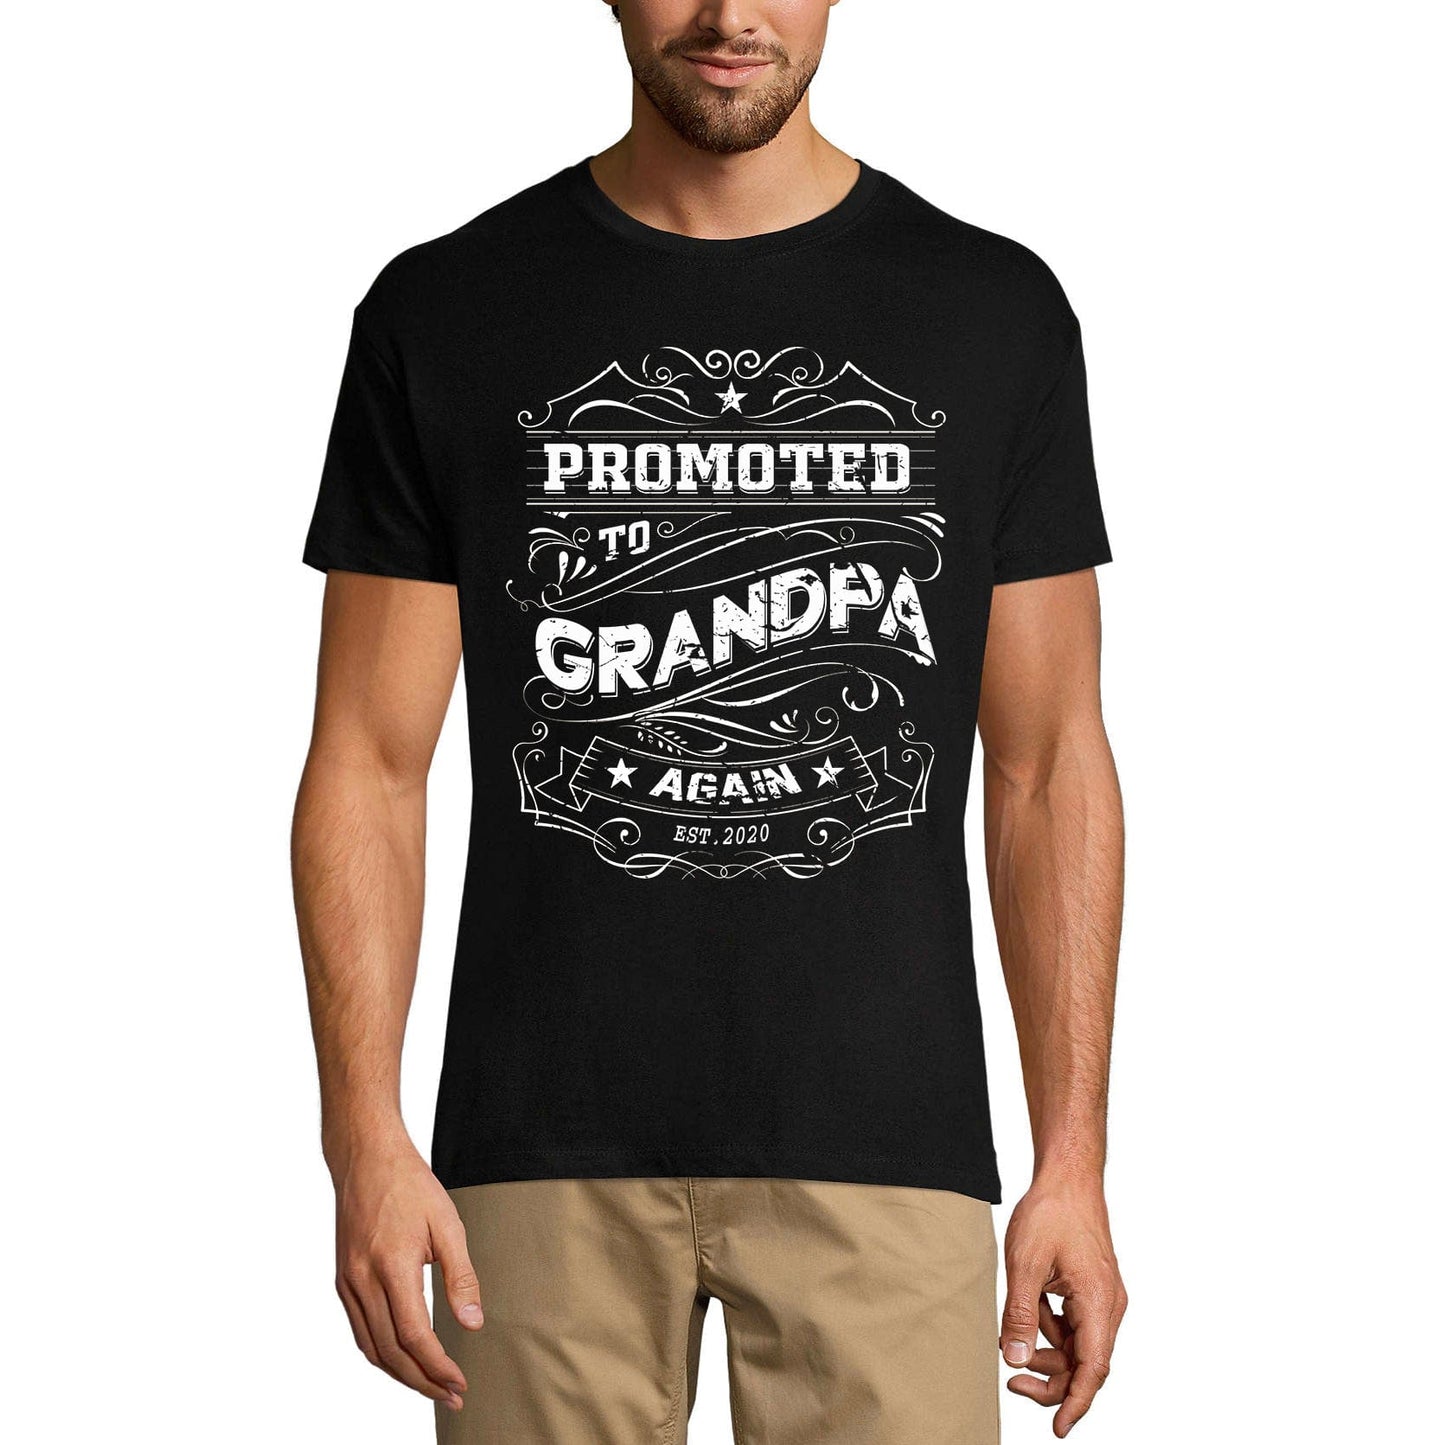 ULTRABASIC Men's Novelty T-Shirt Promoted to Grandad Again - Funny Tee Shirt